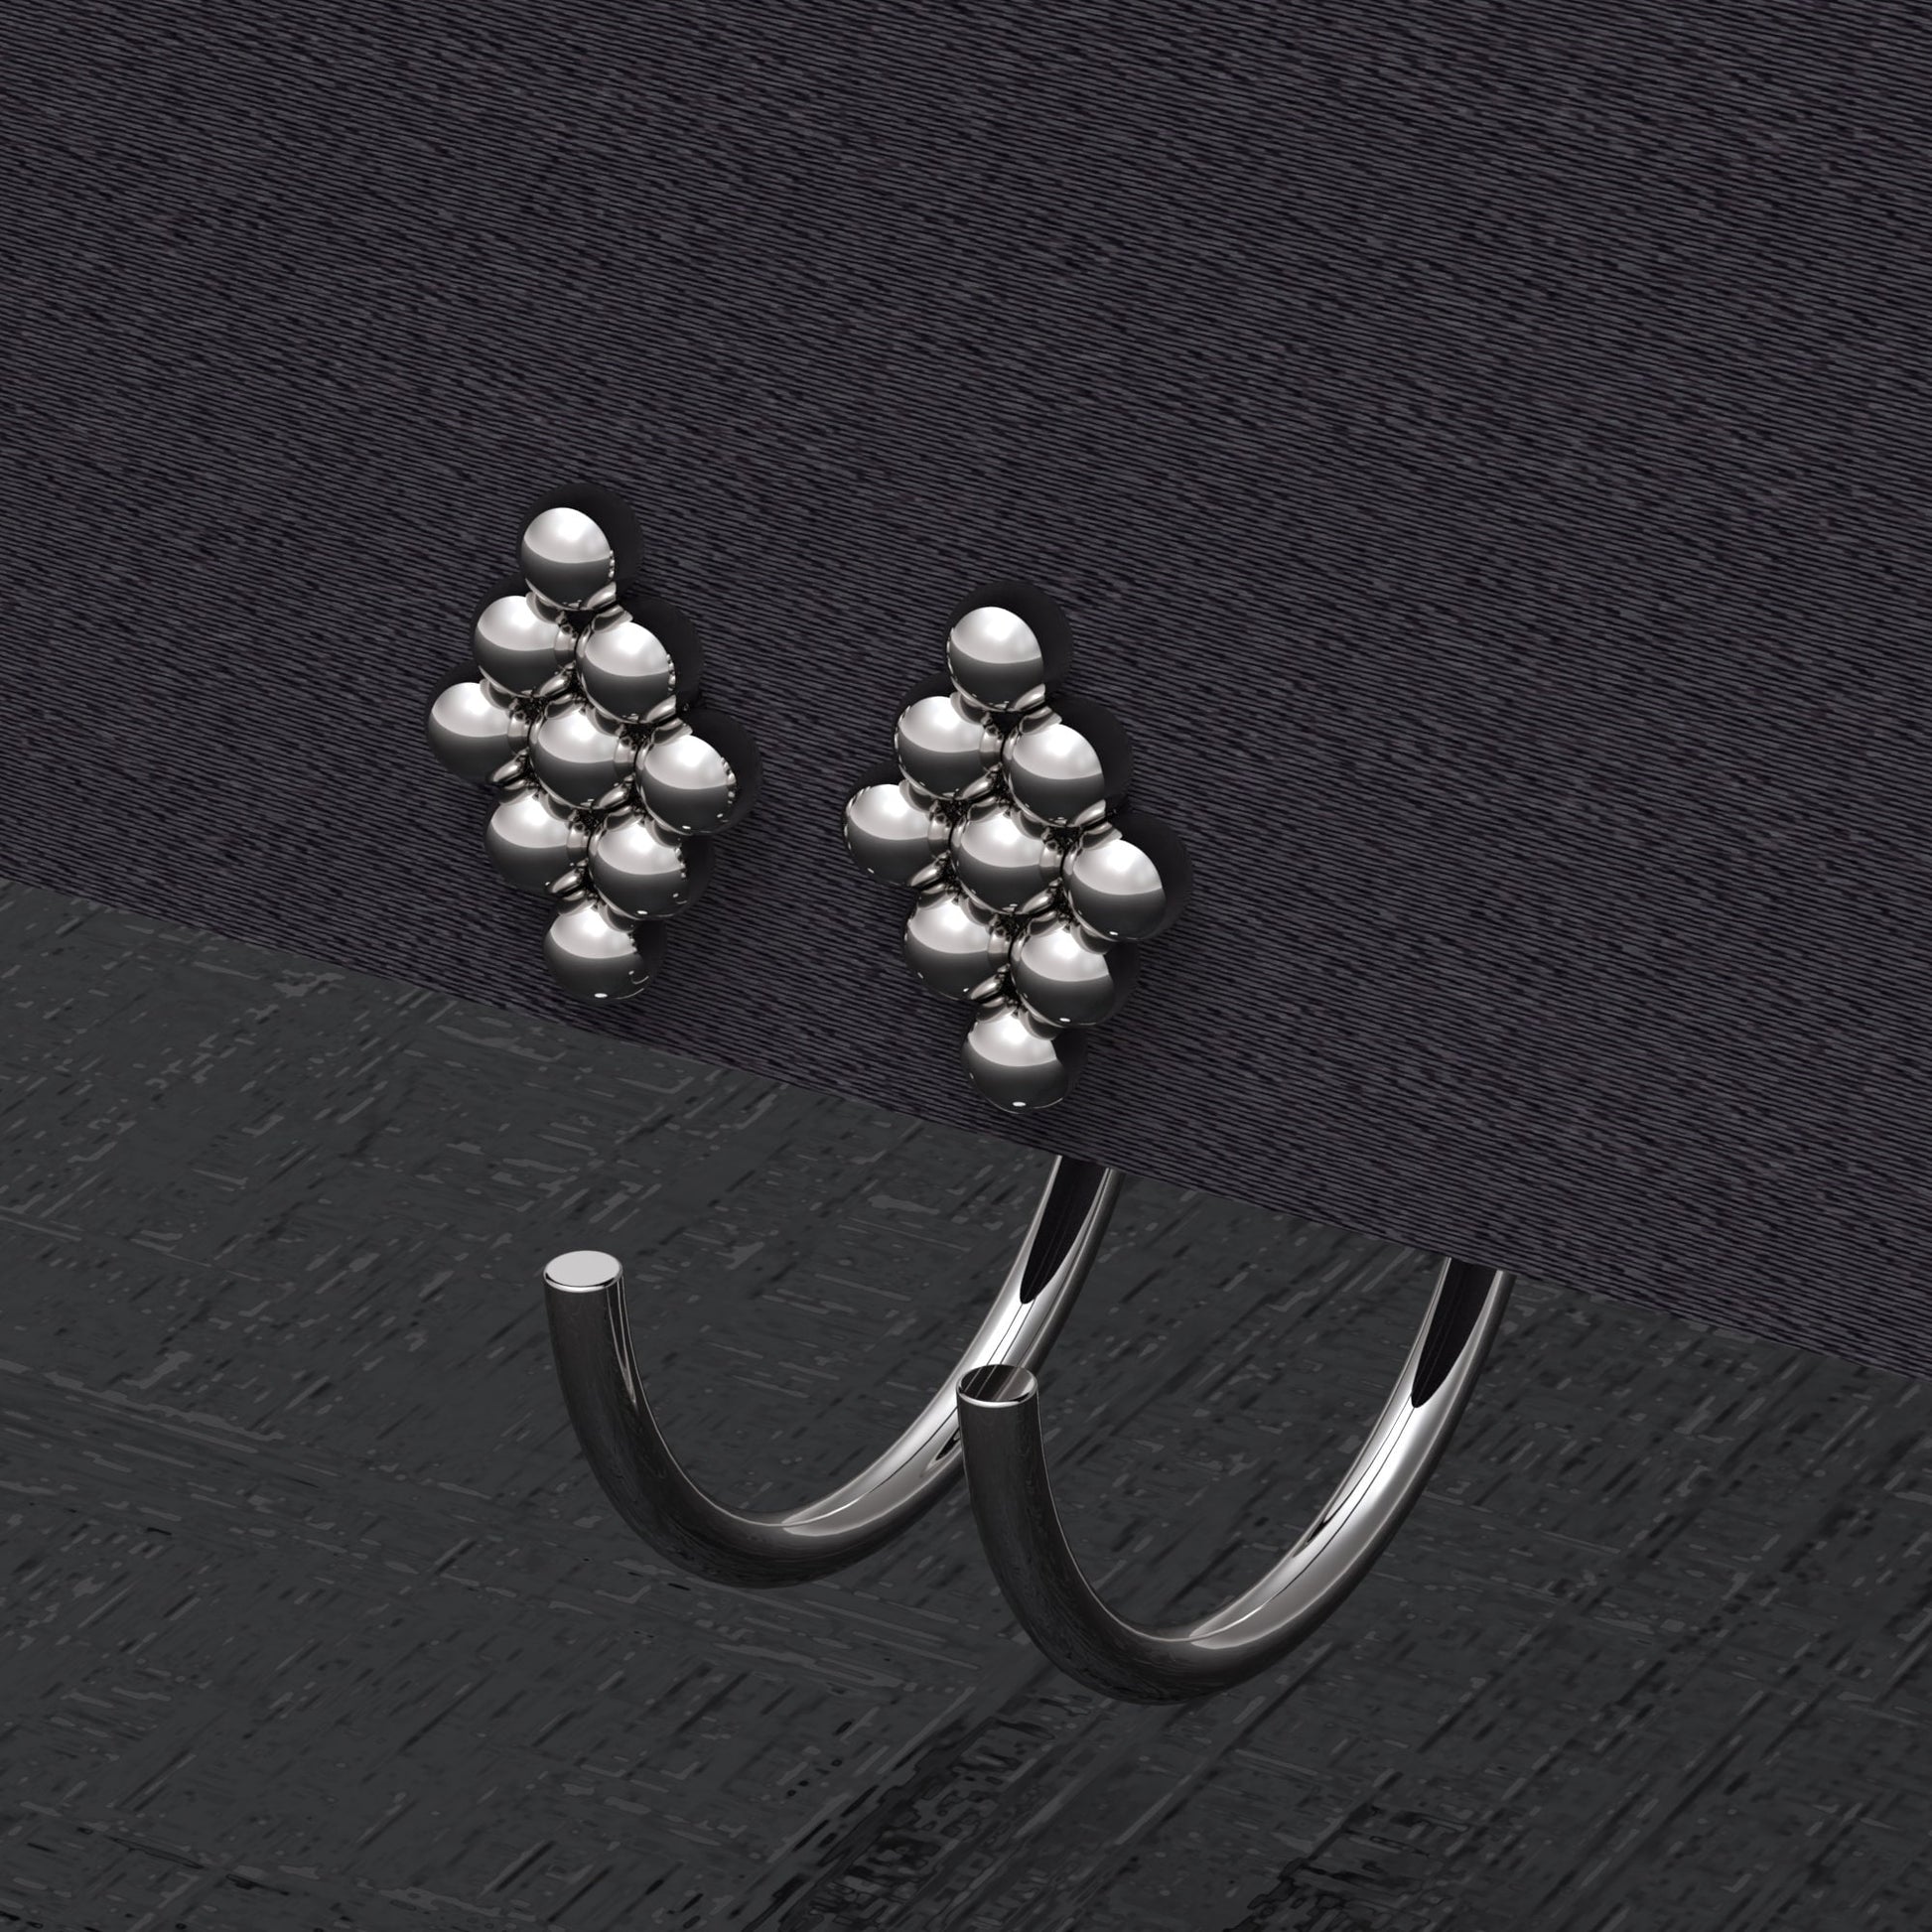 Small Hoop Earrings Surgical Steel - TitaniumFashion